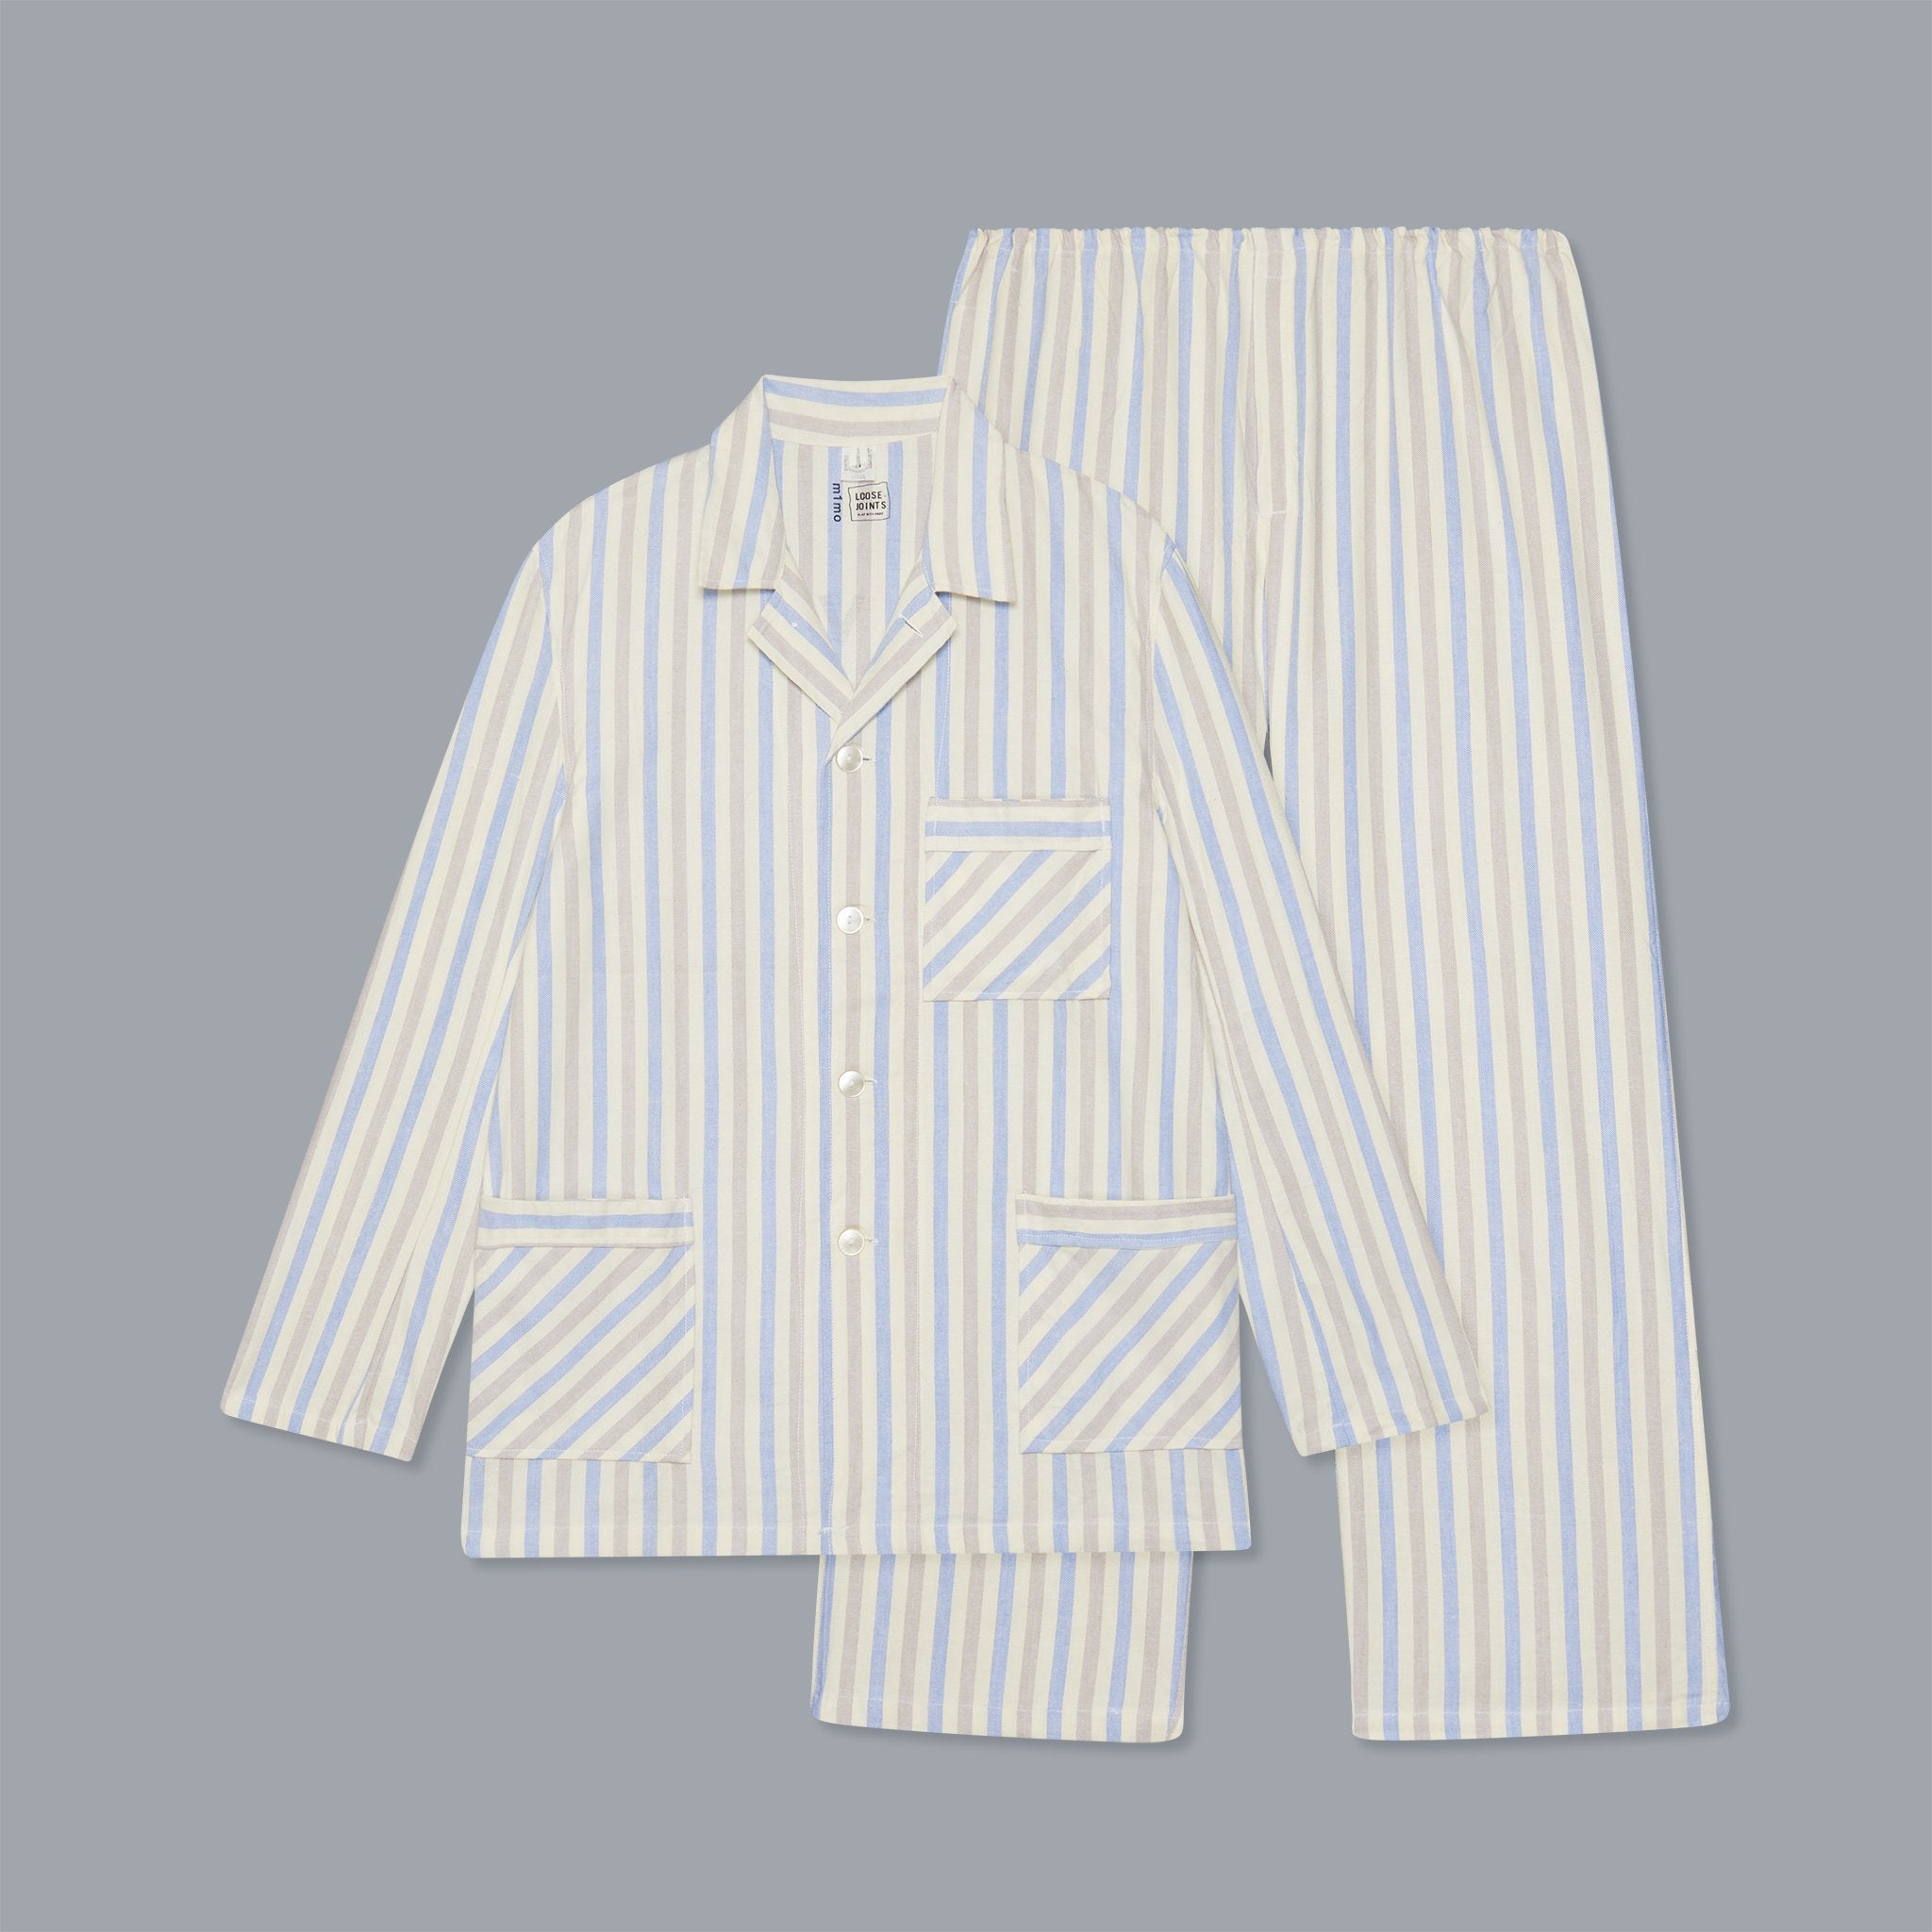 loosejoints &amp; m1mo - TOMOO GOKITA - 'LA VIDA' vintage pajamas